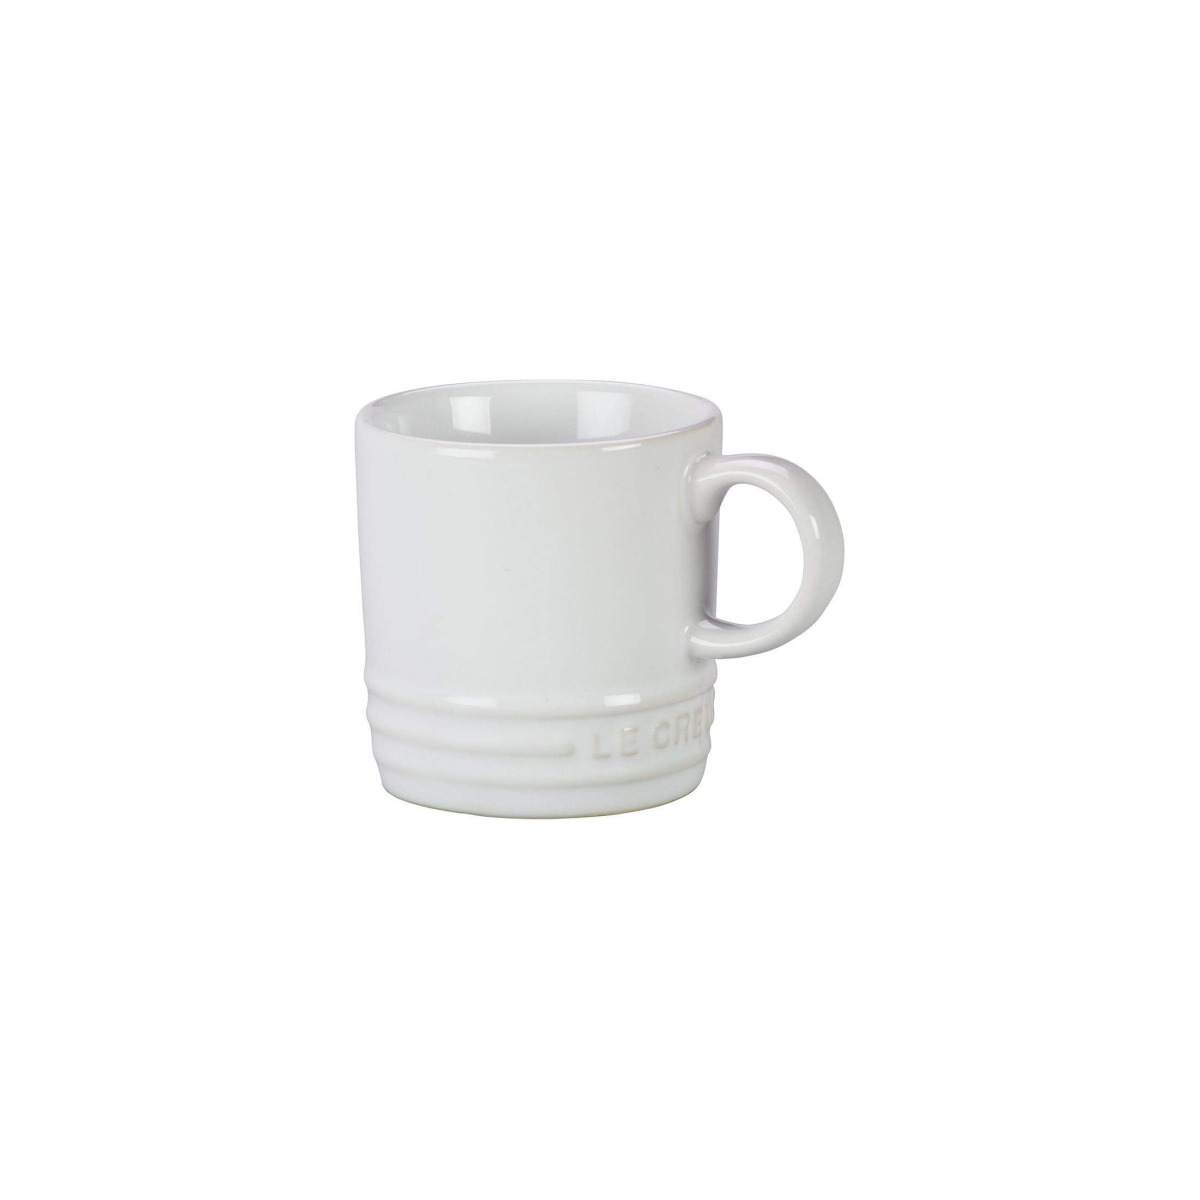 https://www.berings.com/wp-content/uploads/2020/12/Le-Creuset-Espresso-Mug-White.jpg